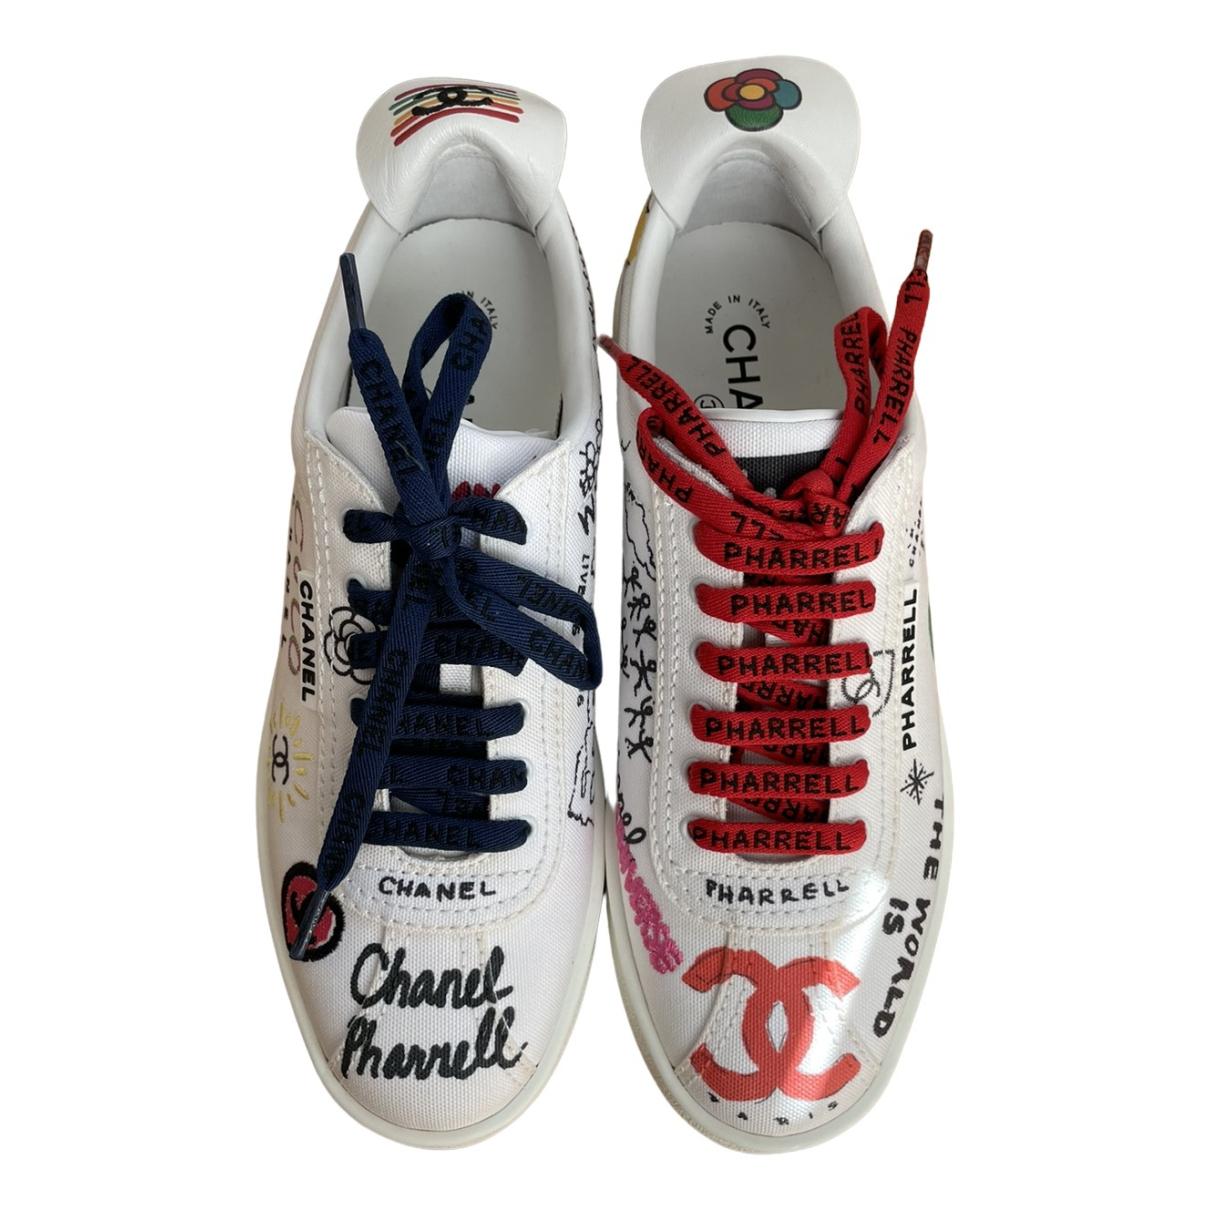 Chanel x Pharrel Williams Shoes